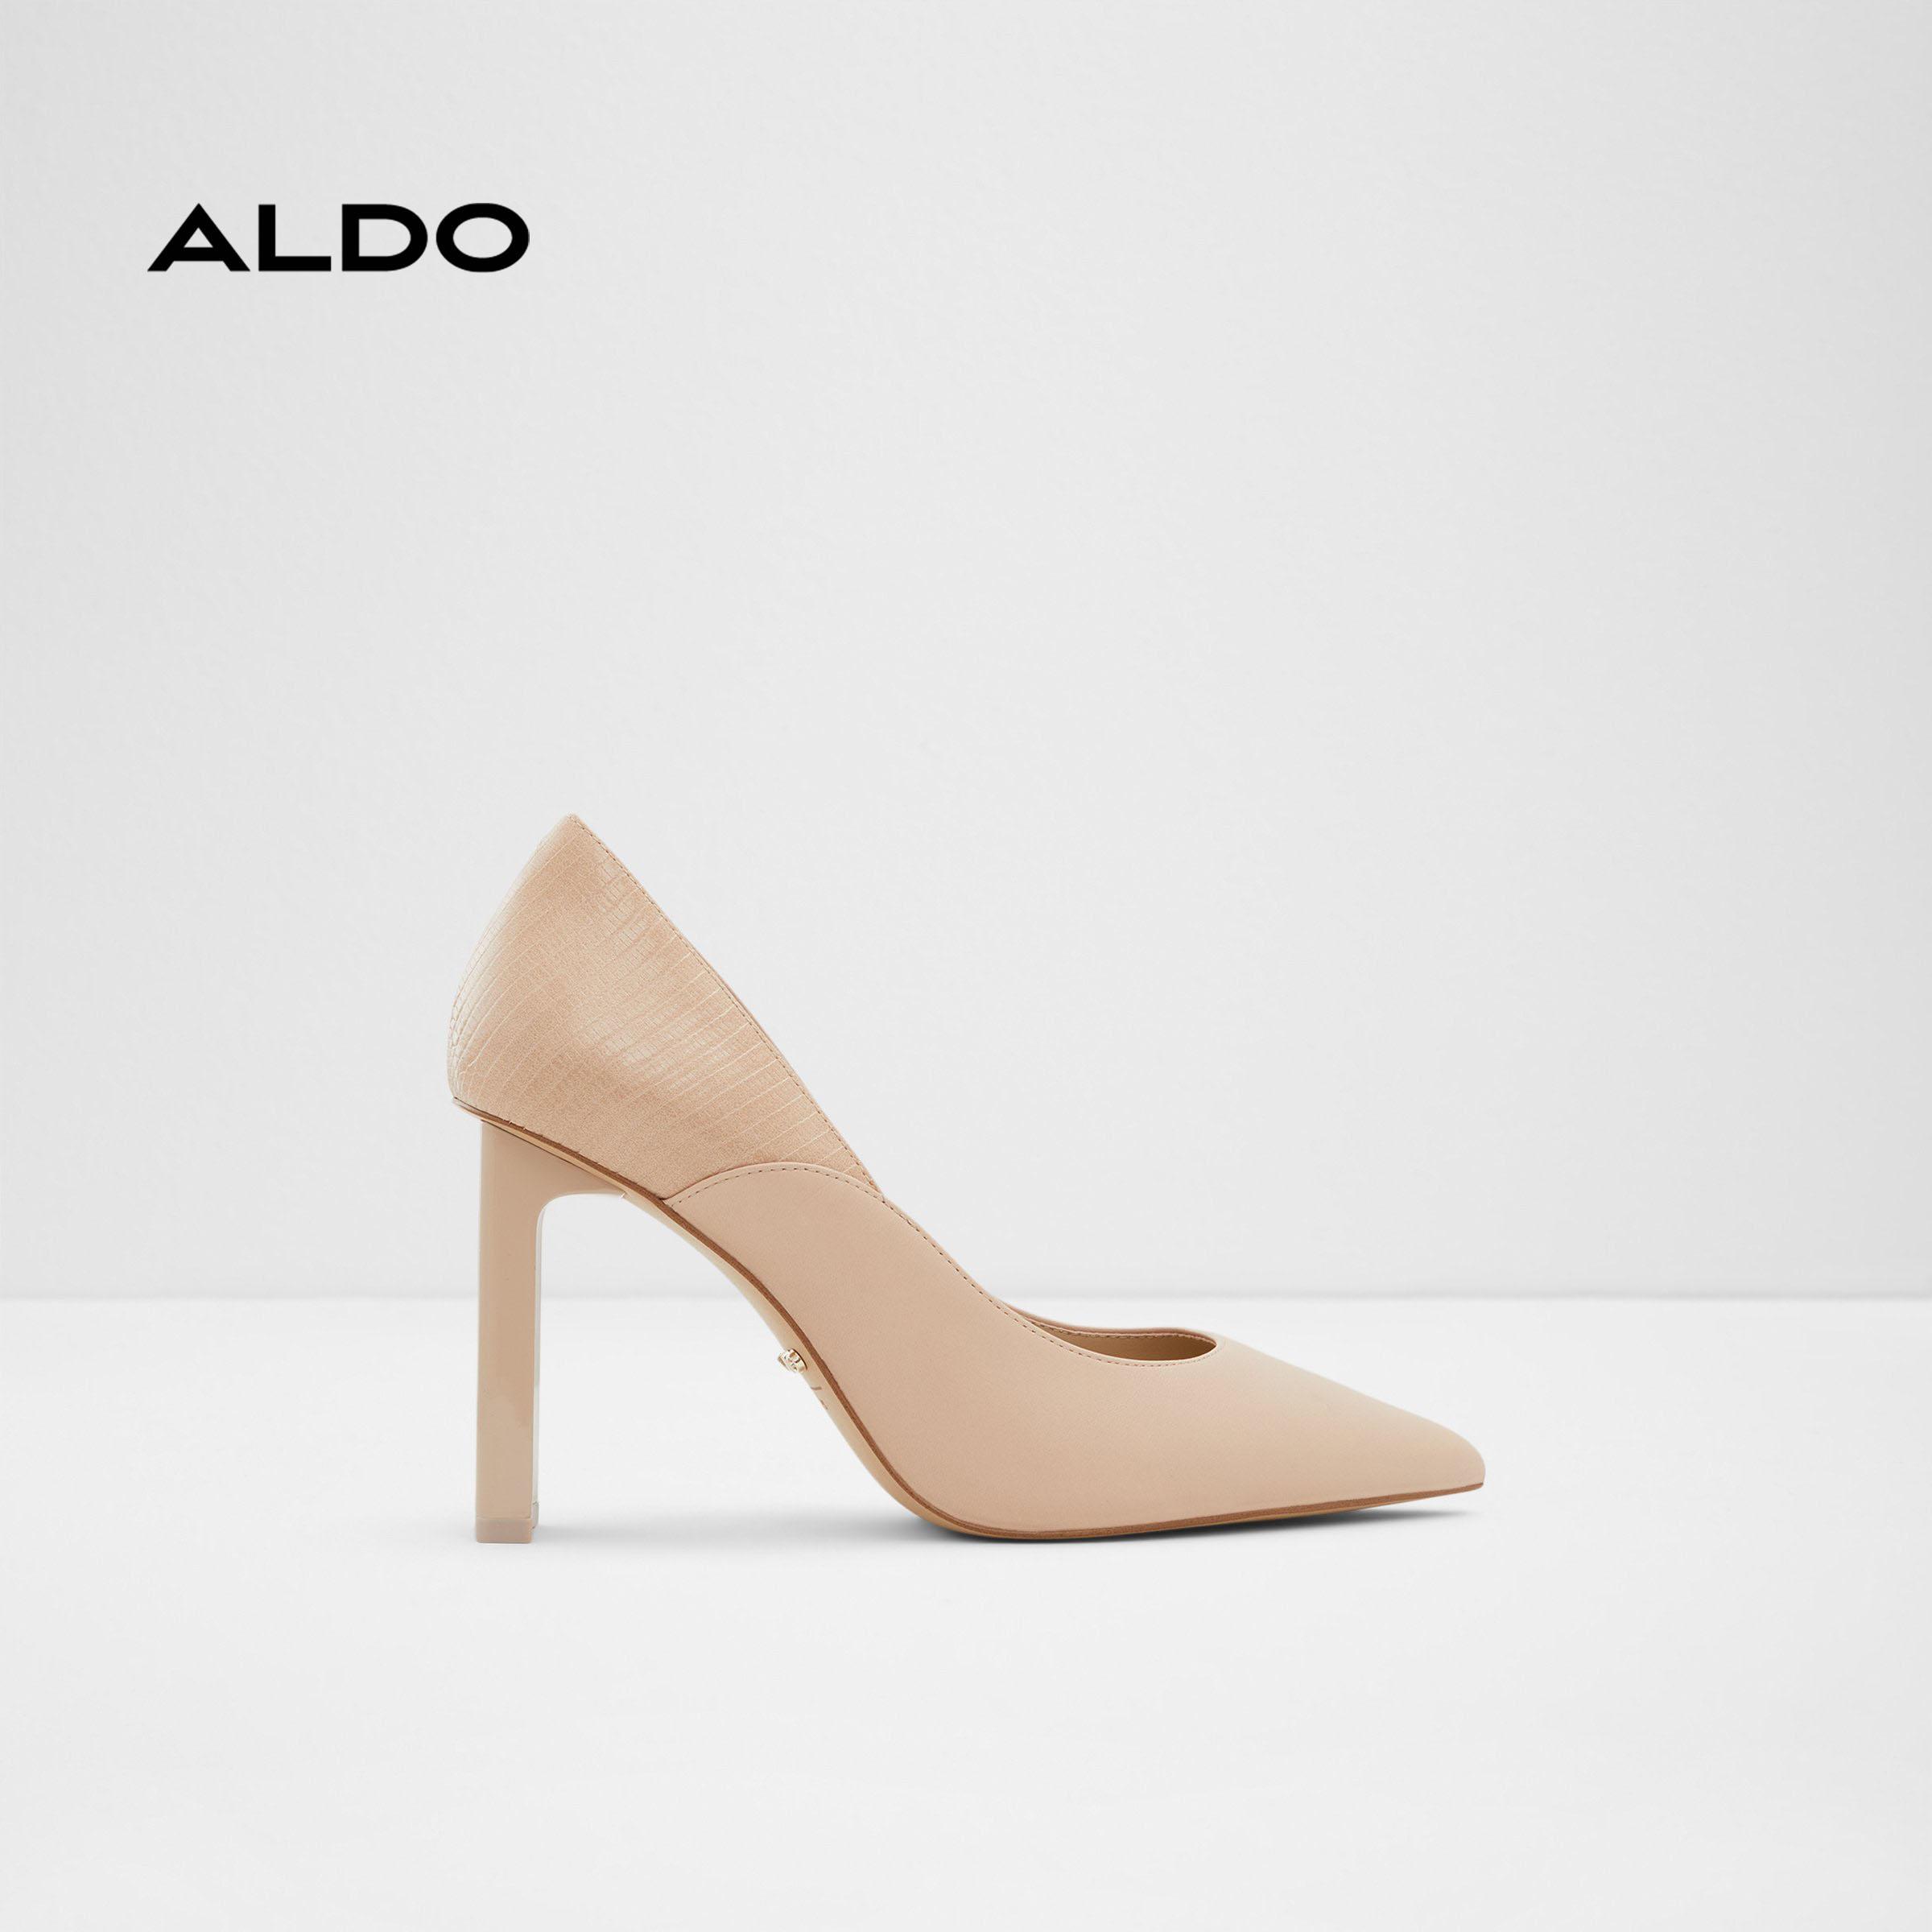 Giày cao gót bít mũi nữ Aldo ASTORE